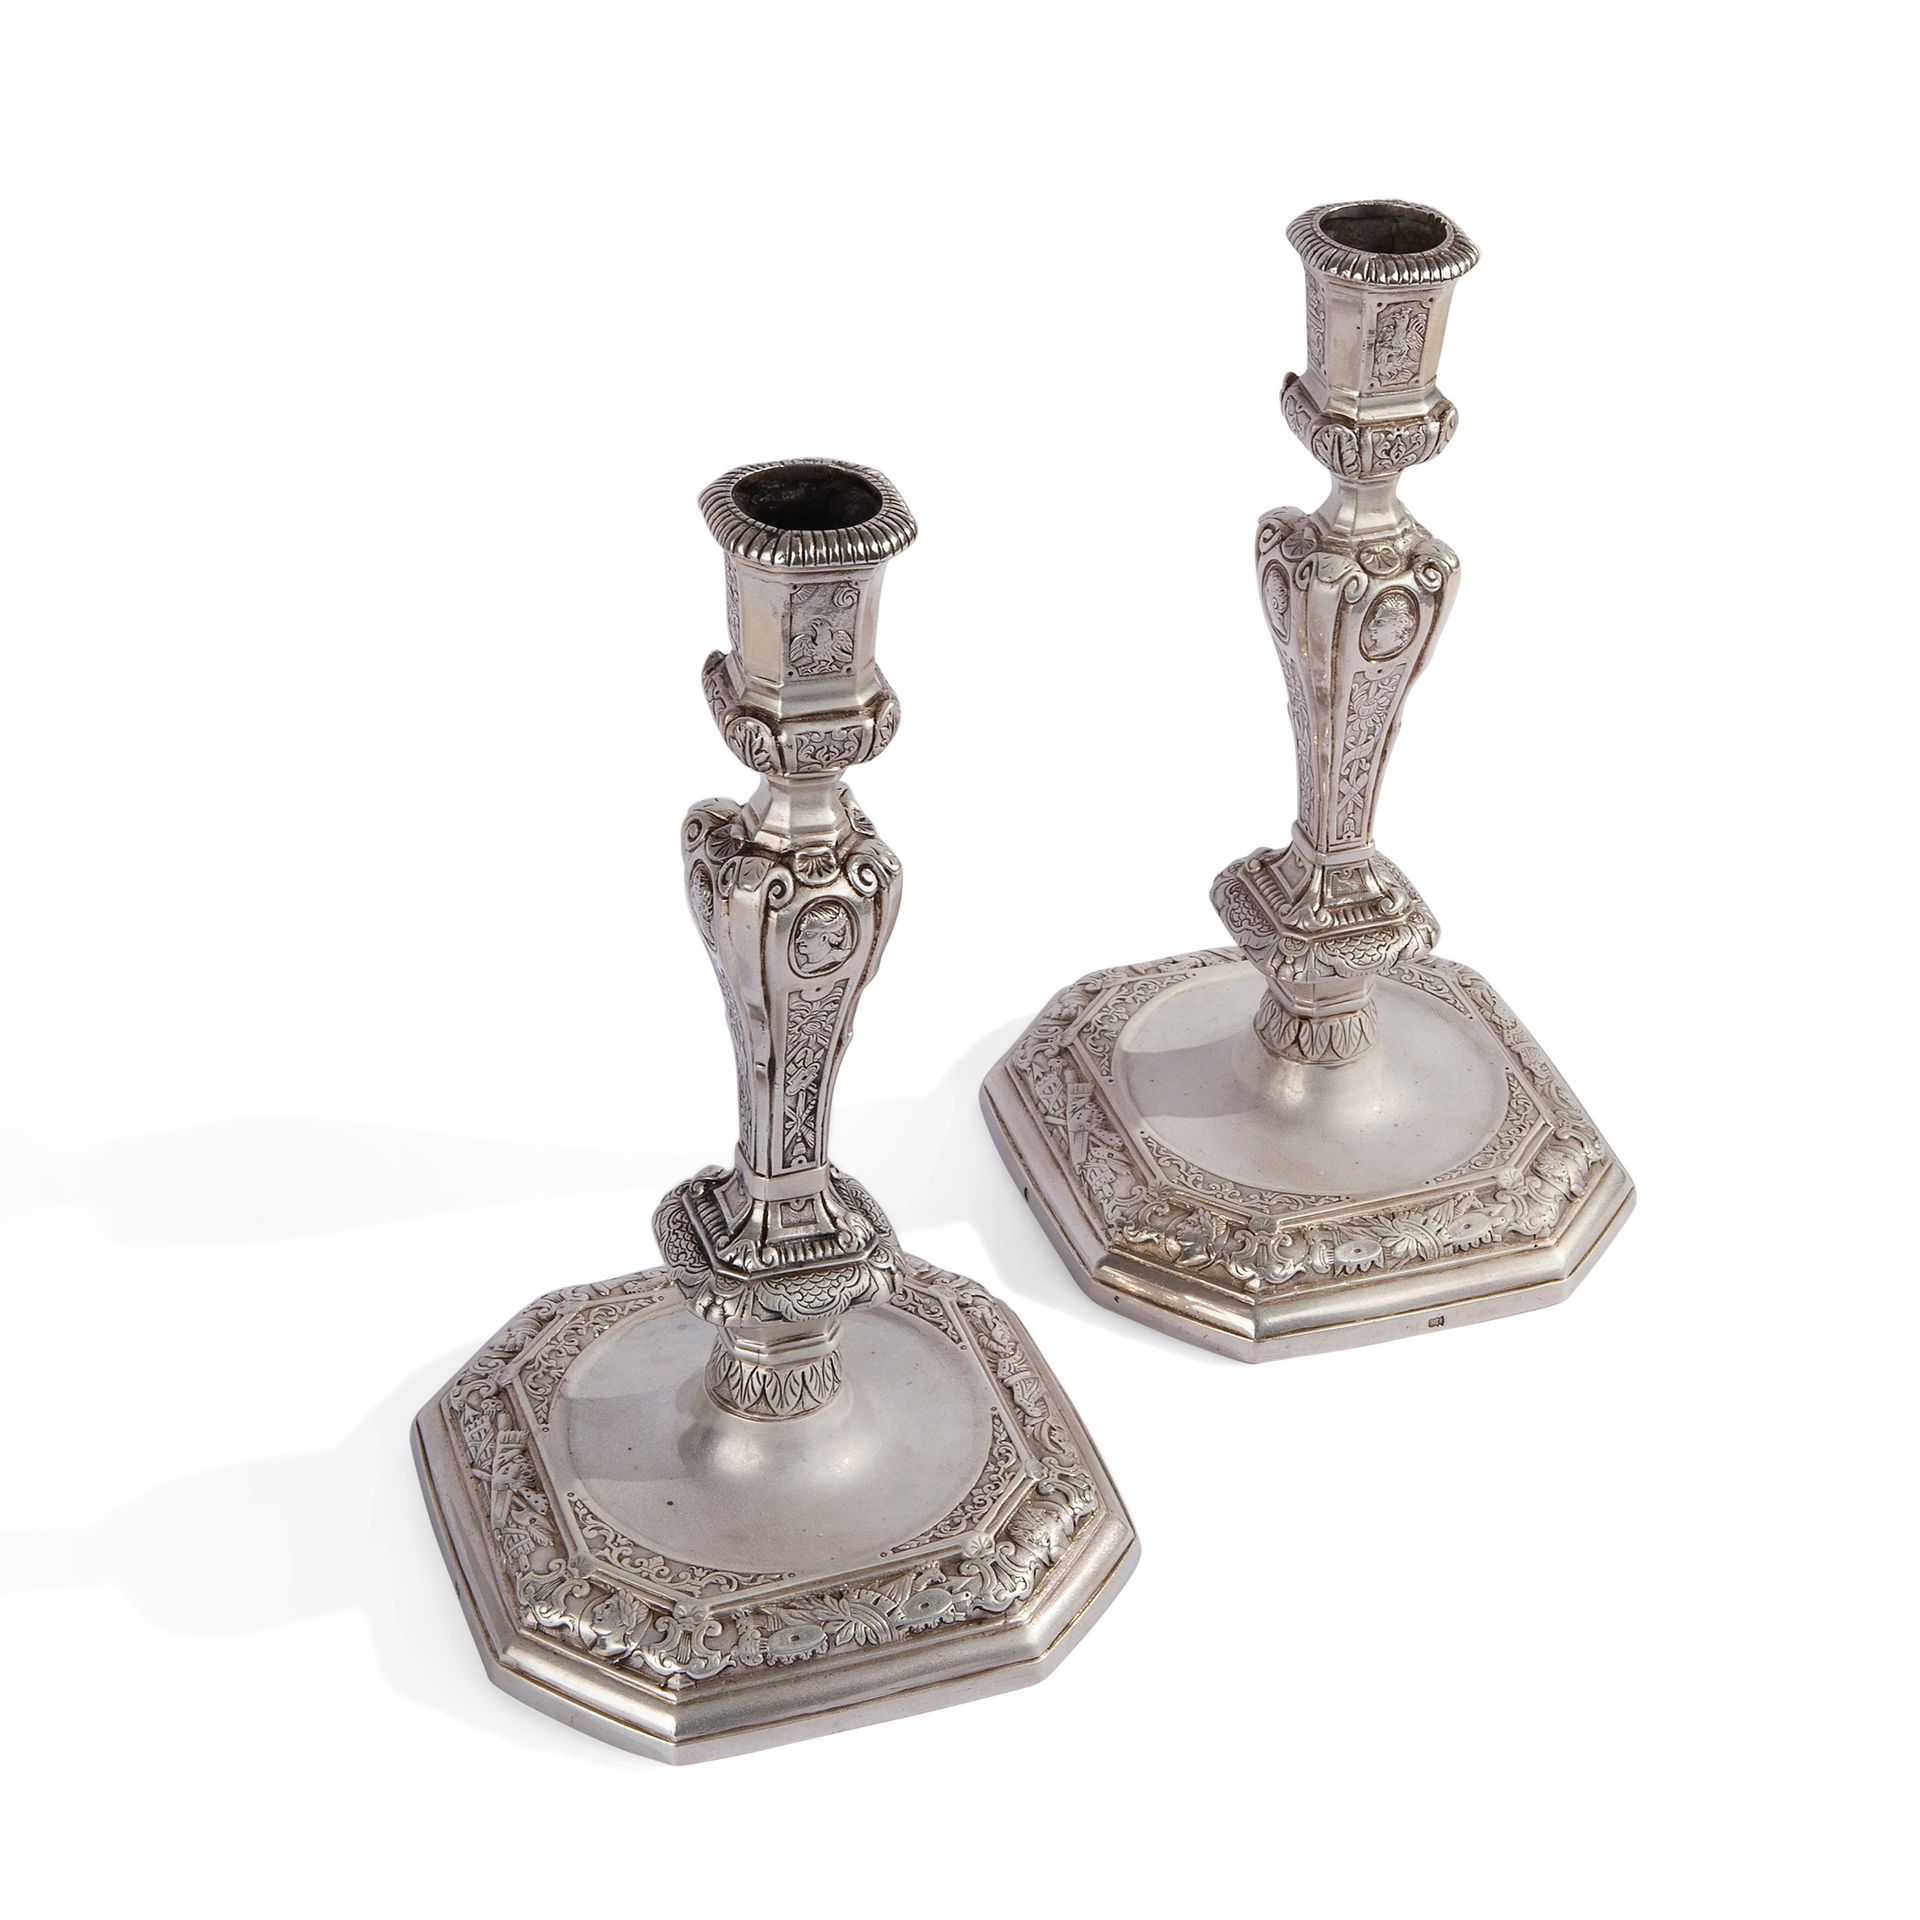 Pair of chased cast silver candlesticks, 18th century 它们带有1814年后荷兰进口的标记。可能起源于比利时&hellip;